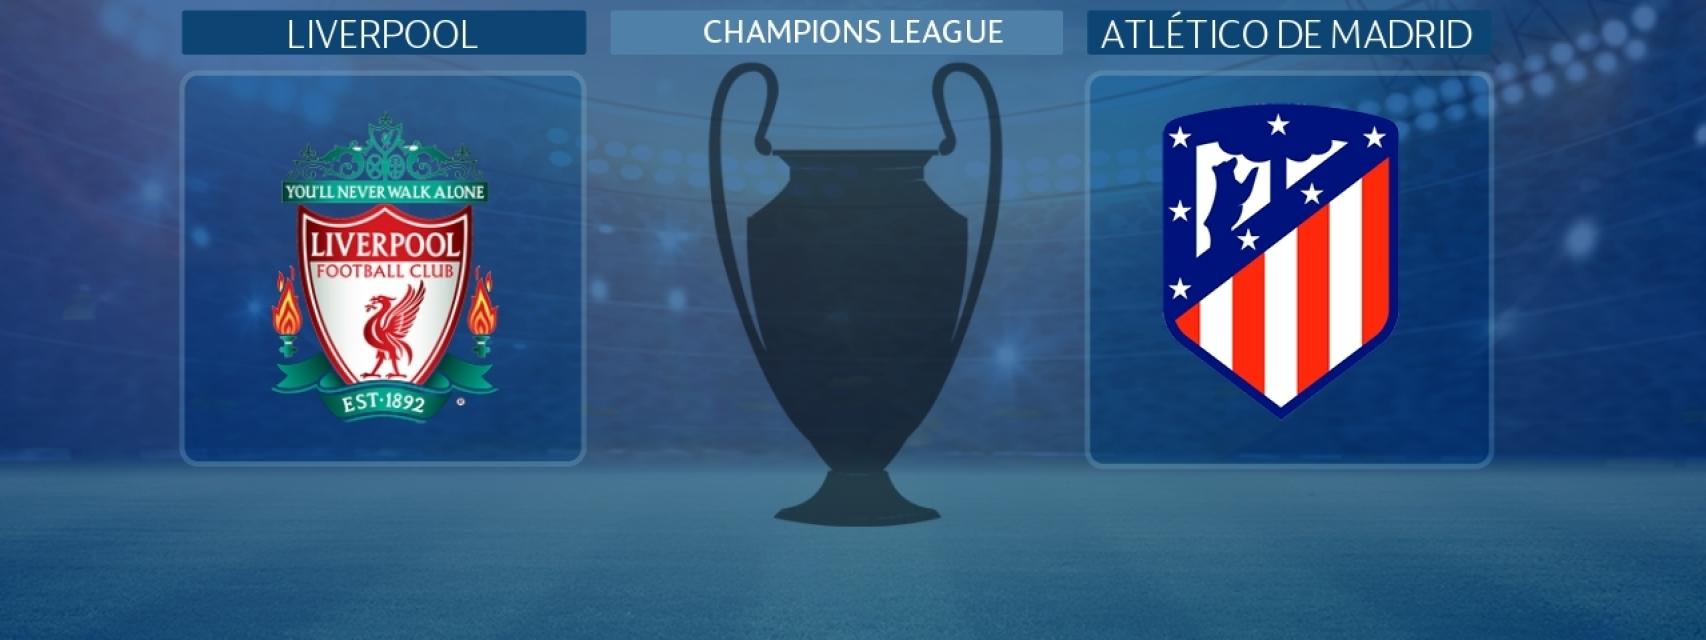 Liverpool - Atlético de Madrid